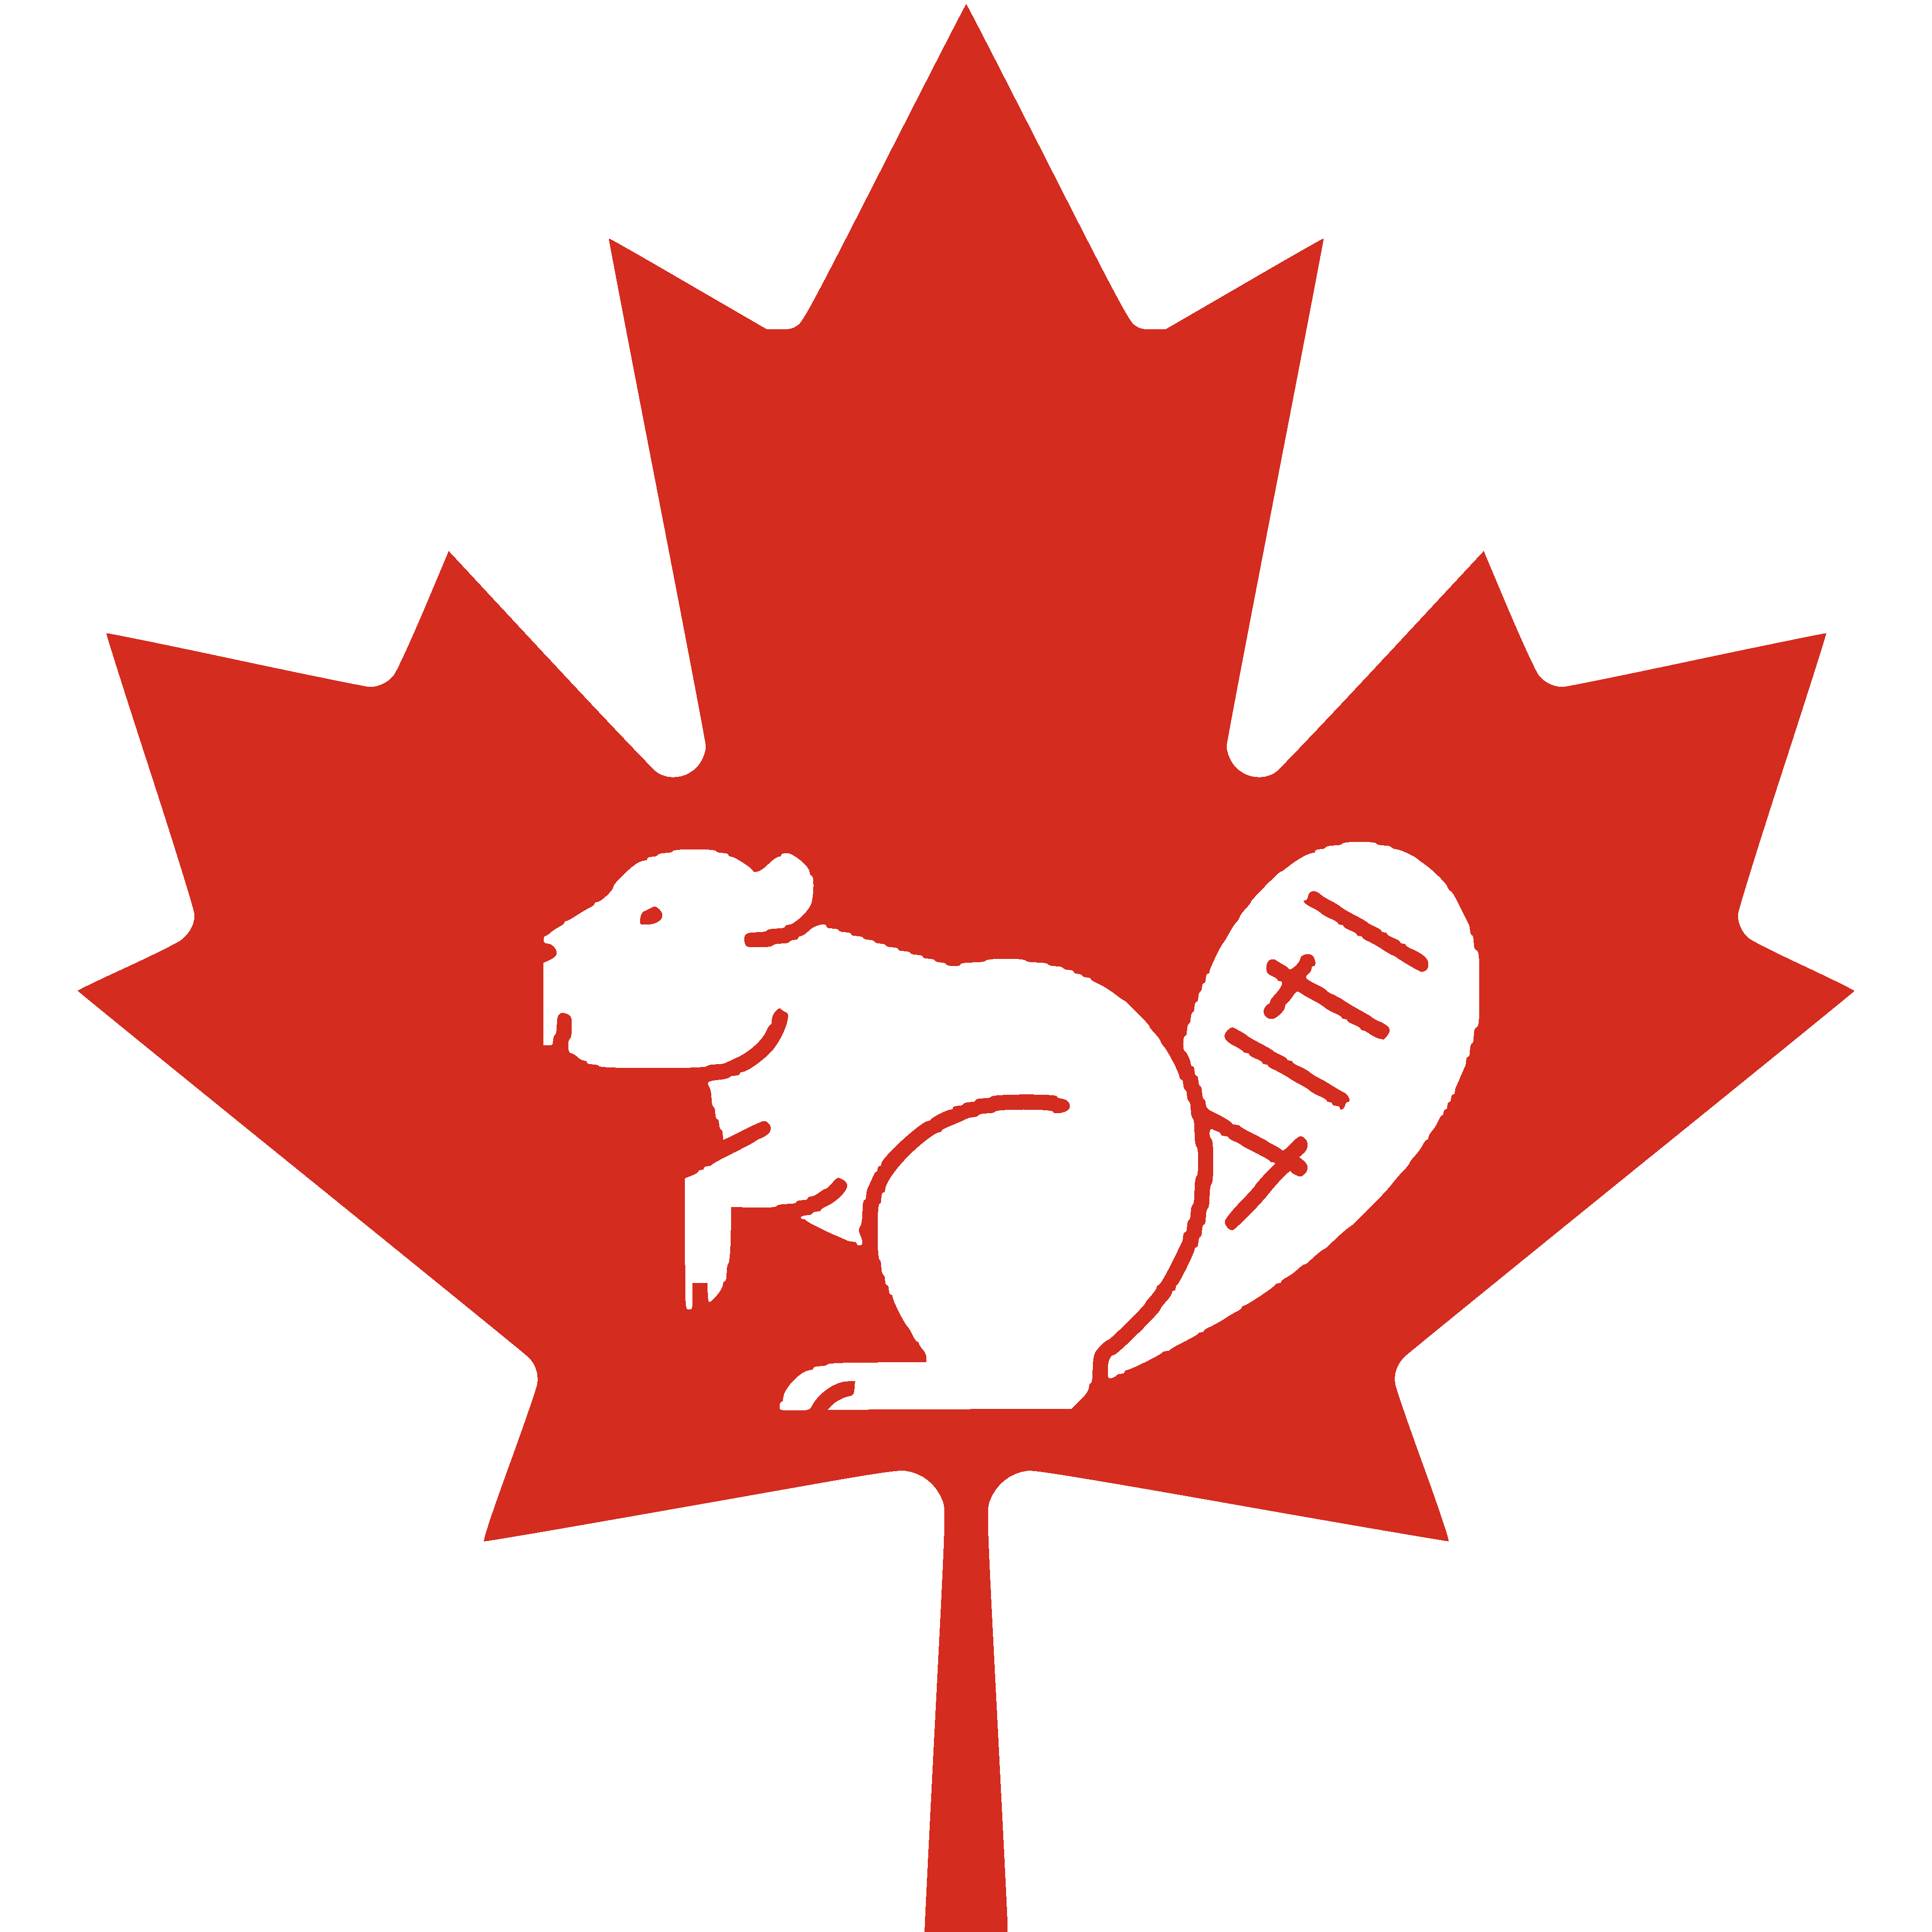 of Canada - Wikipedia